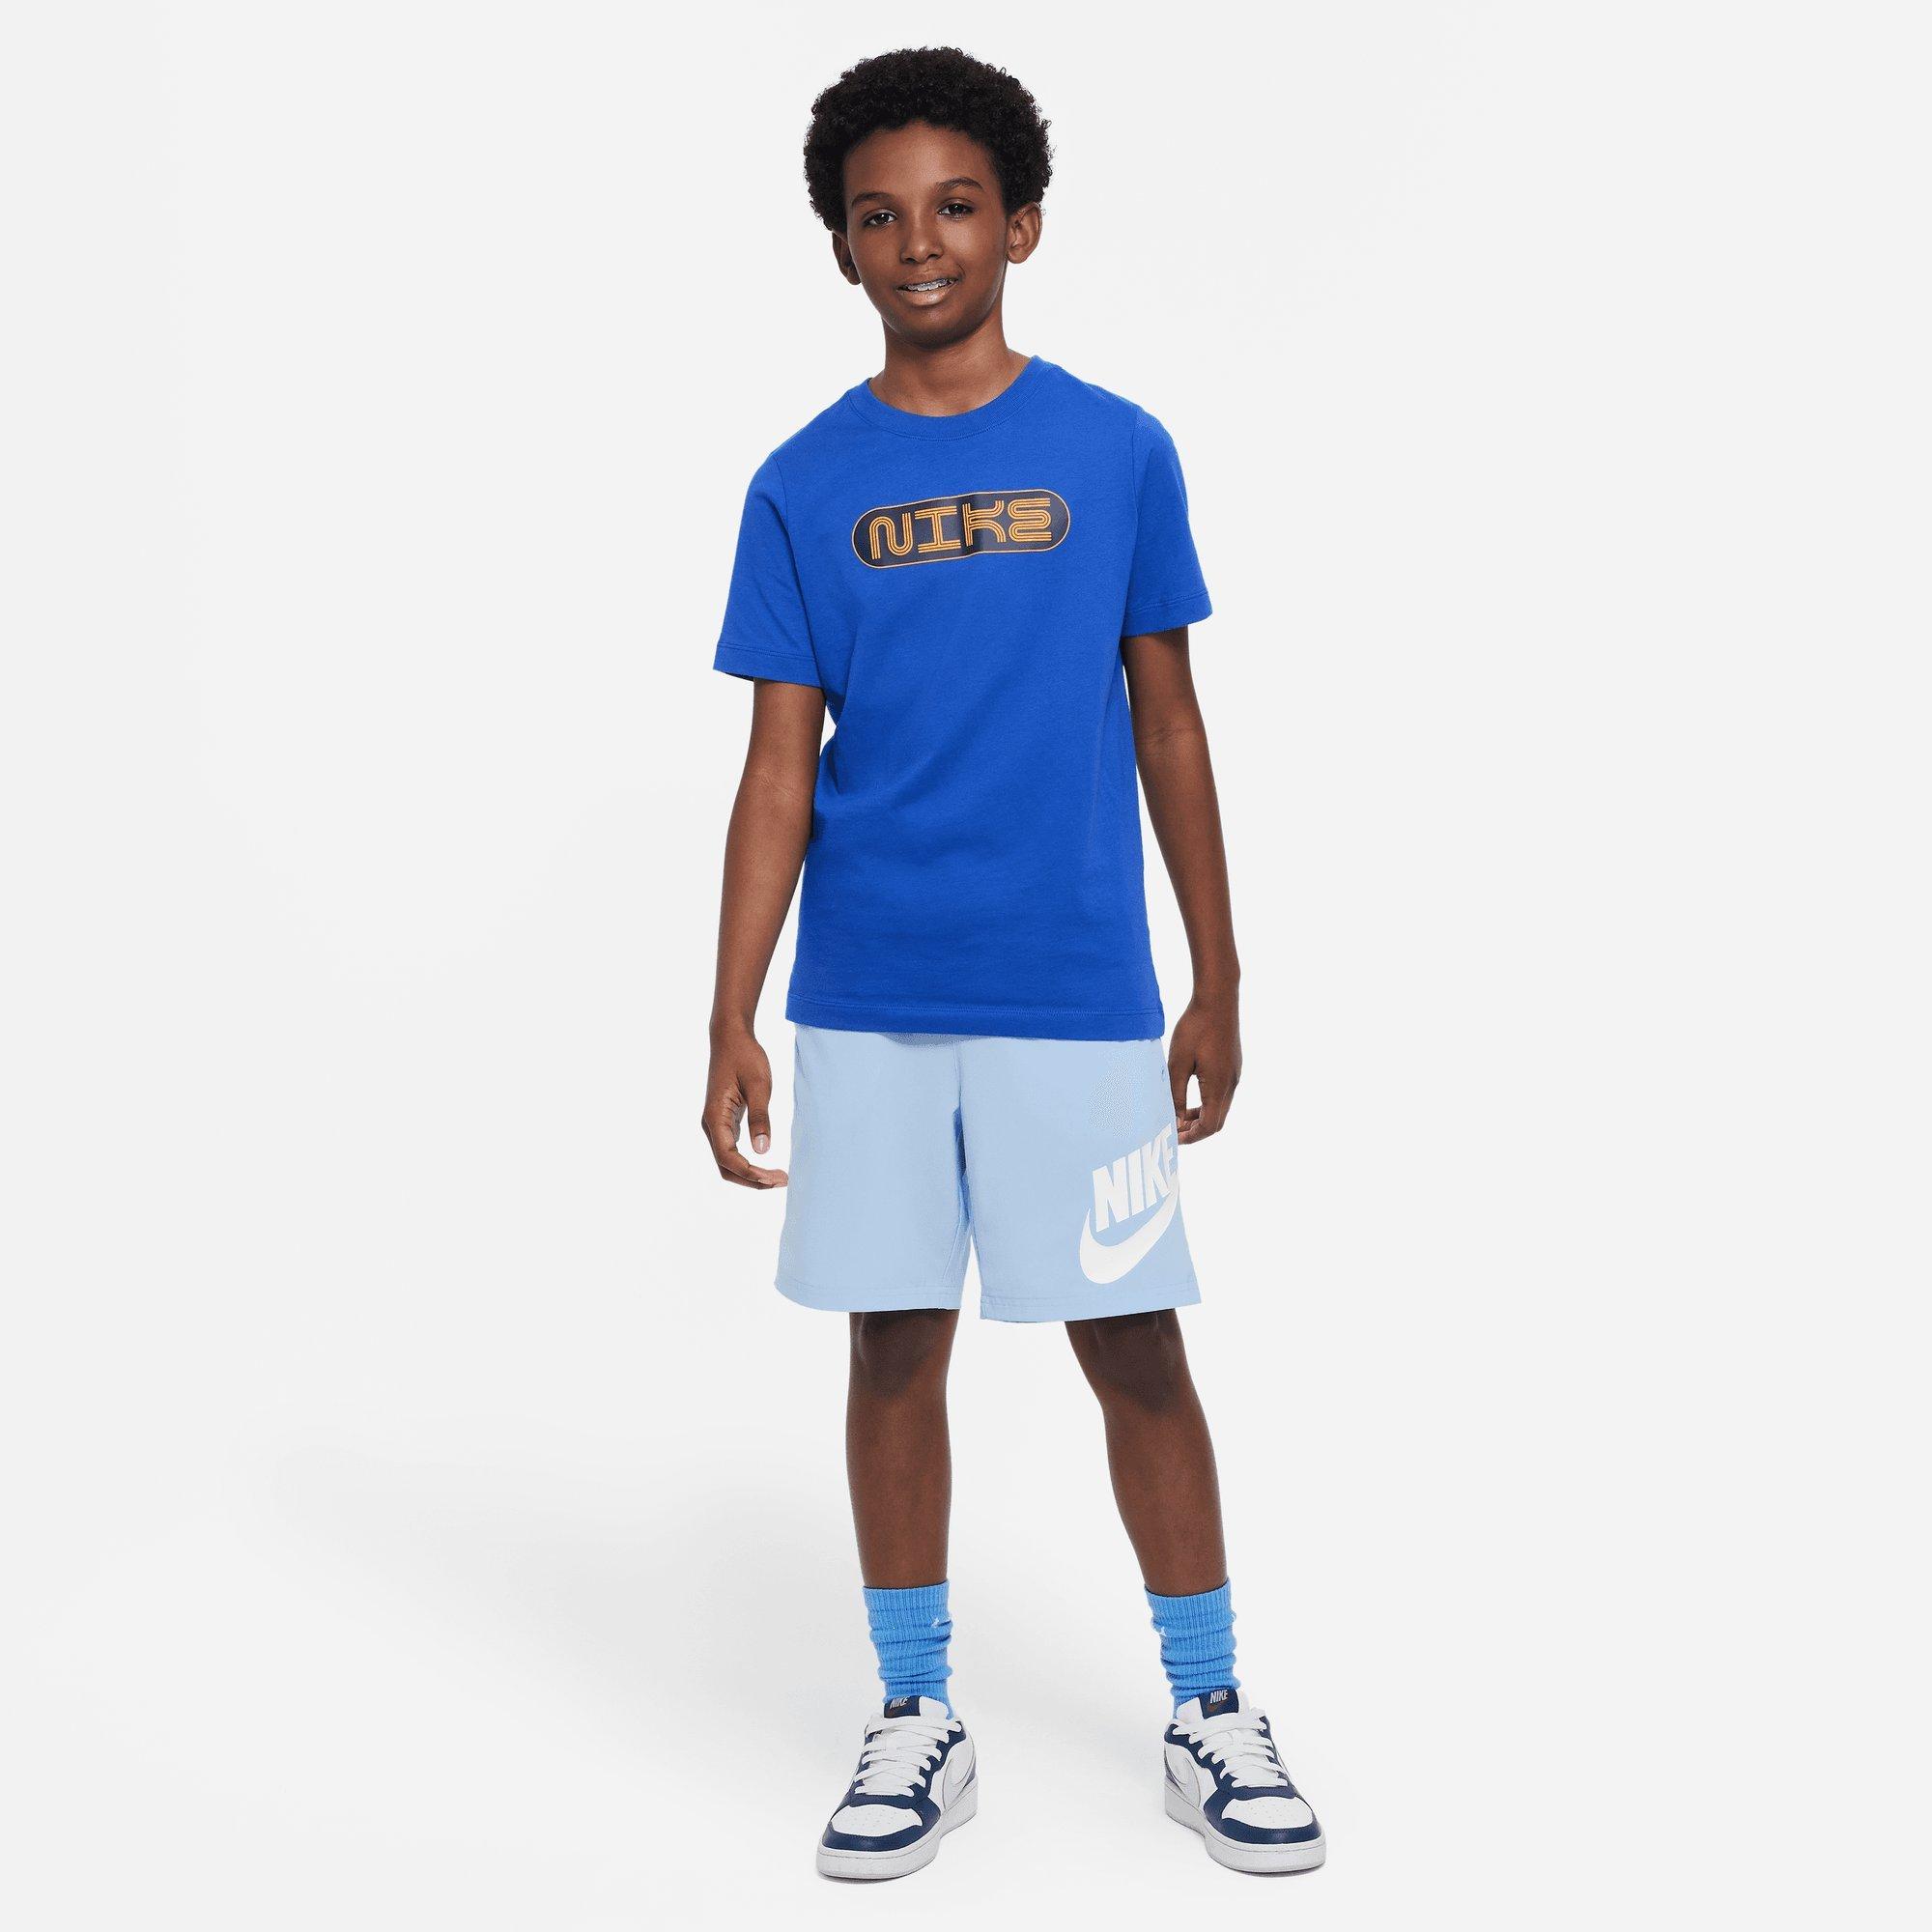 Junior Boys' [8-20] Sportwear Amplify Short Sleeve T-Shirt from Nike